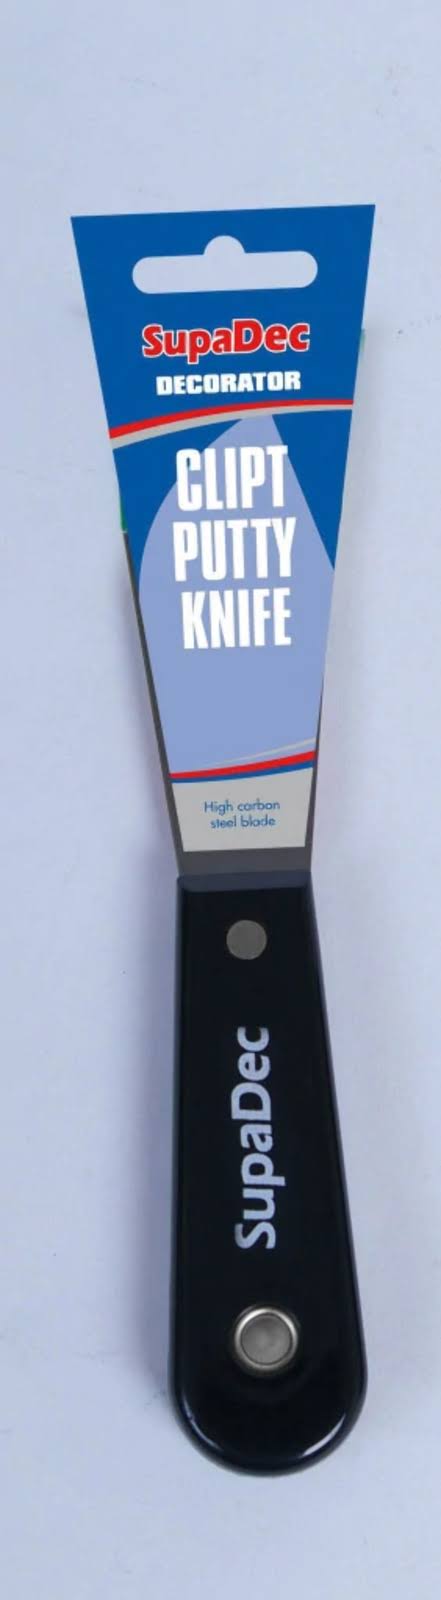 SupaDec - Decorator Clipt Putty Knife